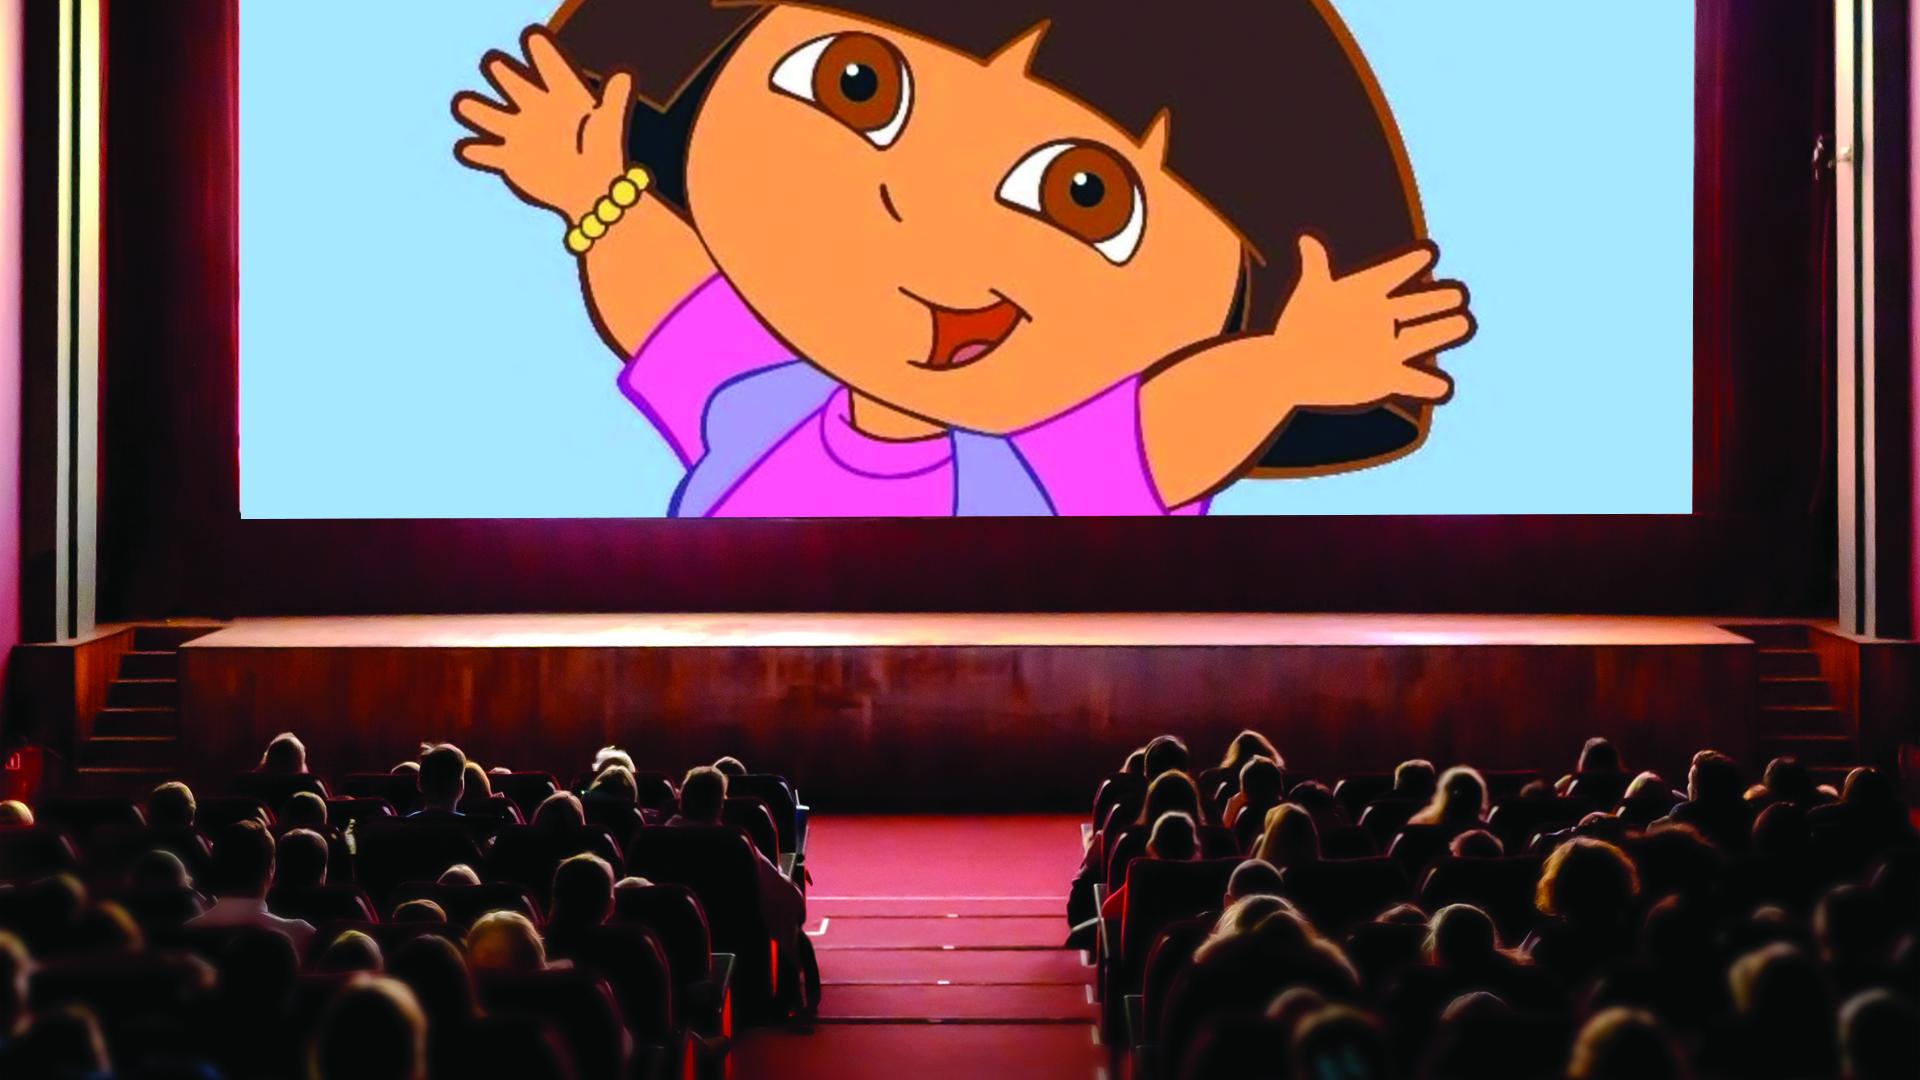 The Dora the Explorer cartoon on the big screen